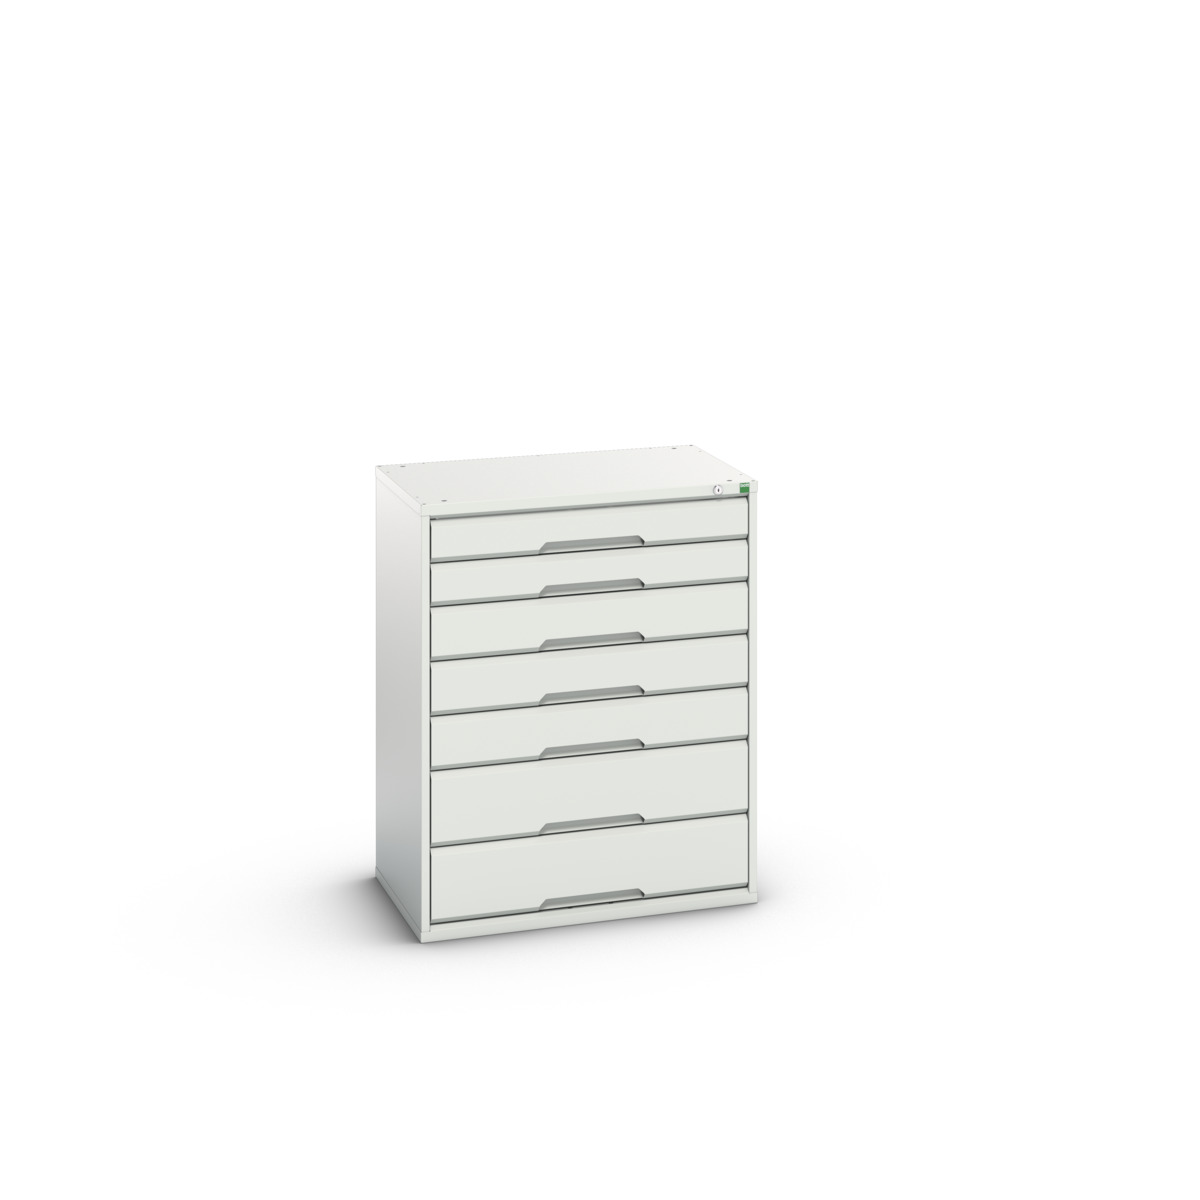 16925449.16 - verso drawer cabinet